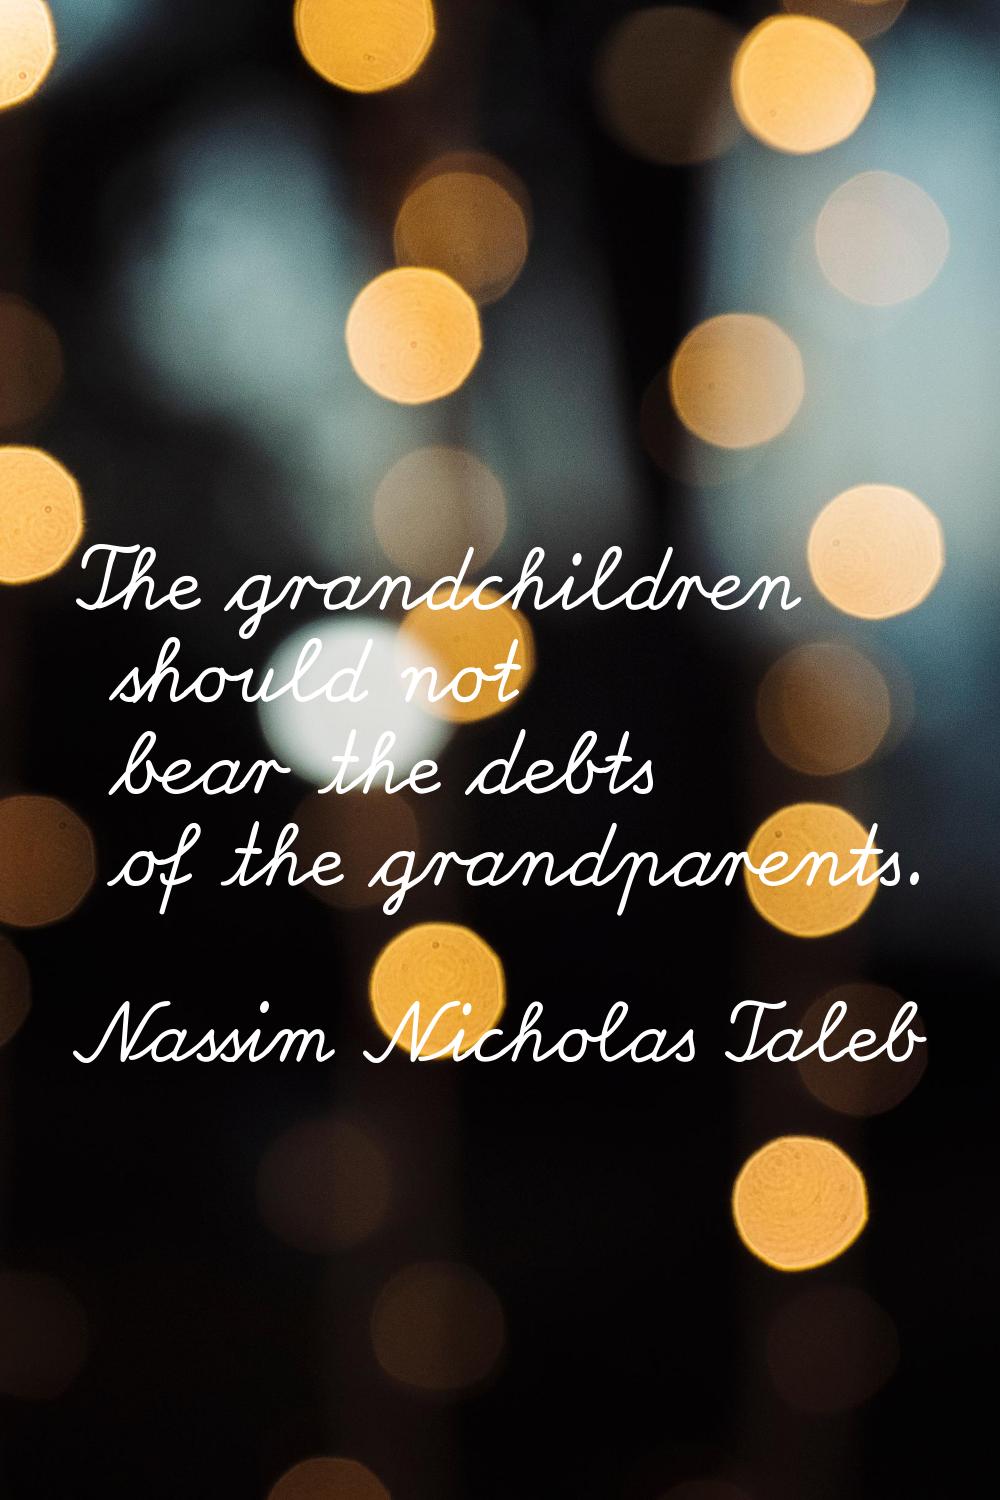 The grandchildren should not bear the debts of the grandparents.